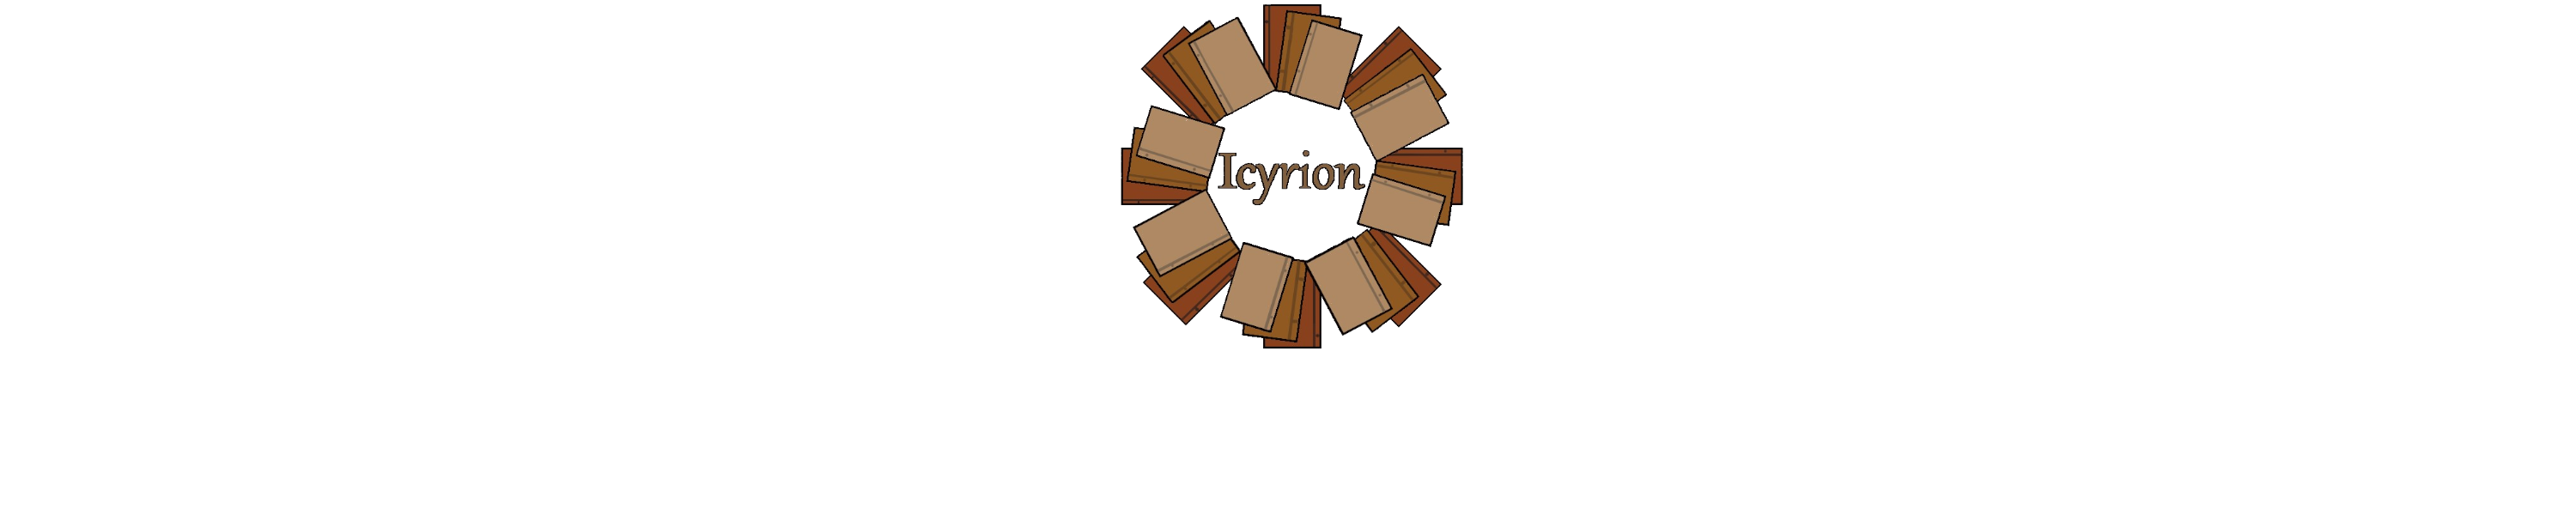 Icyrion